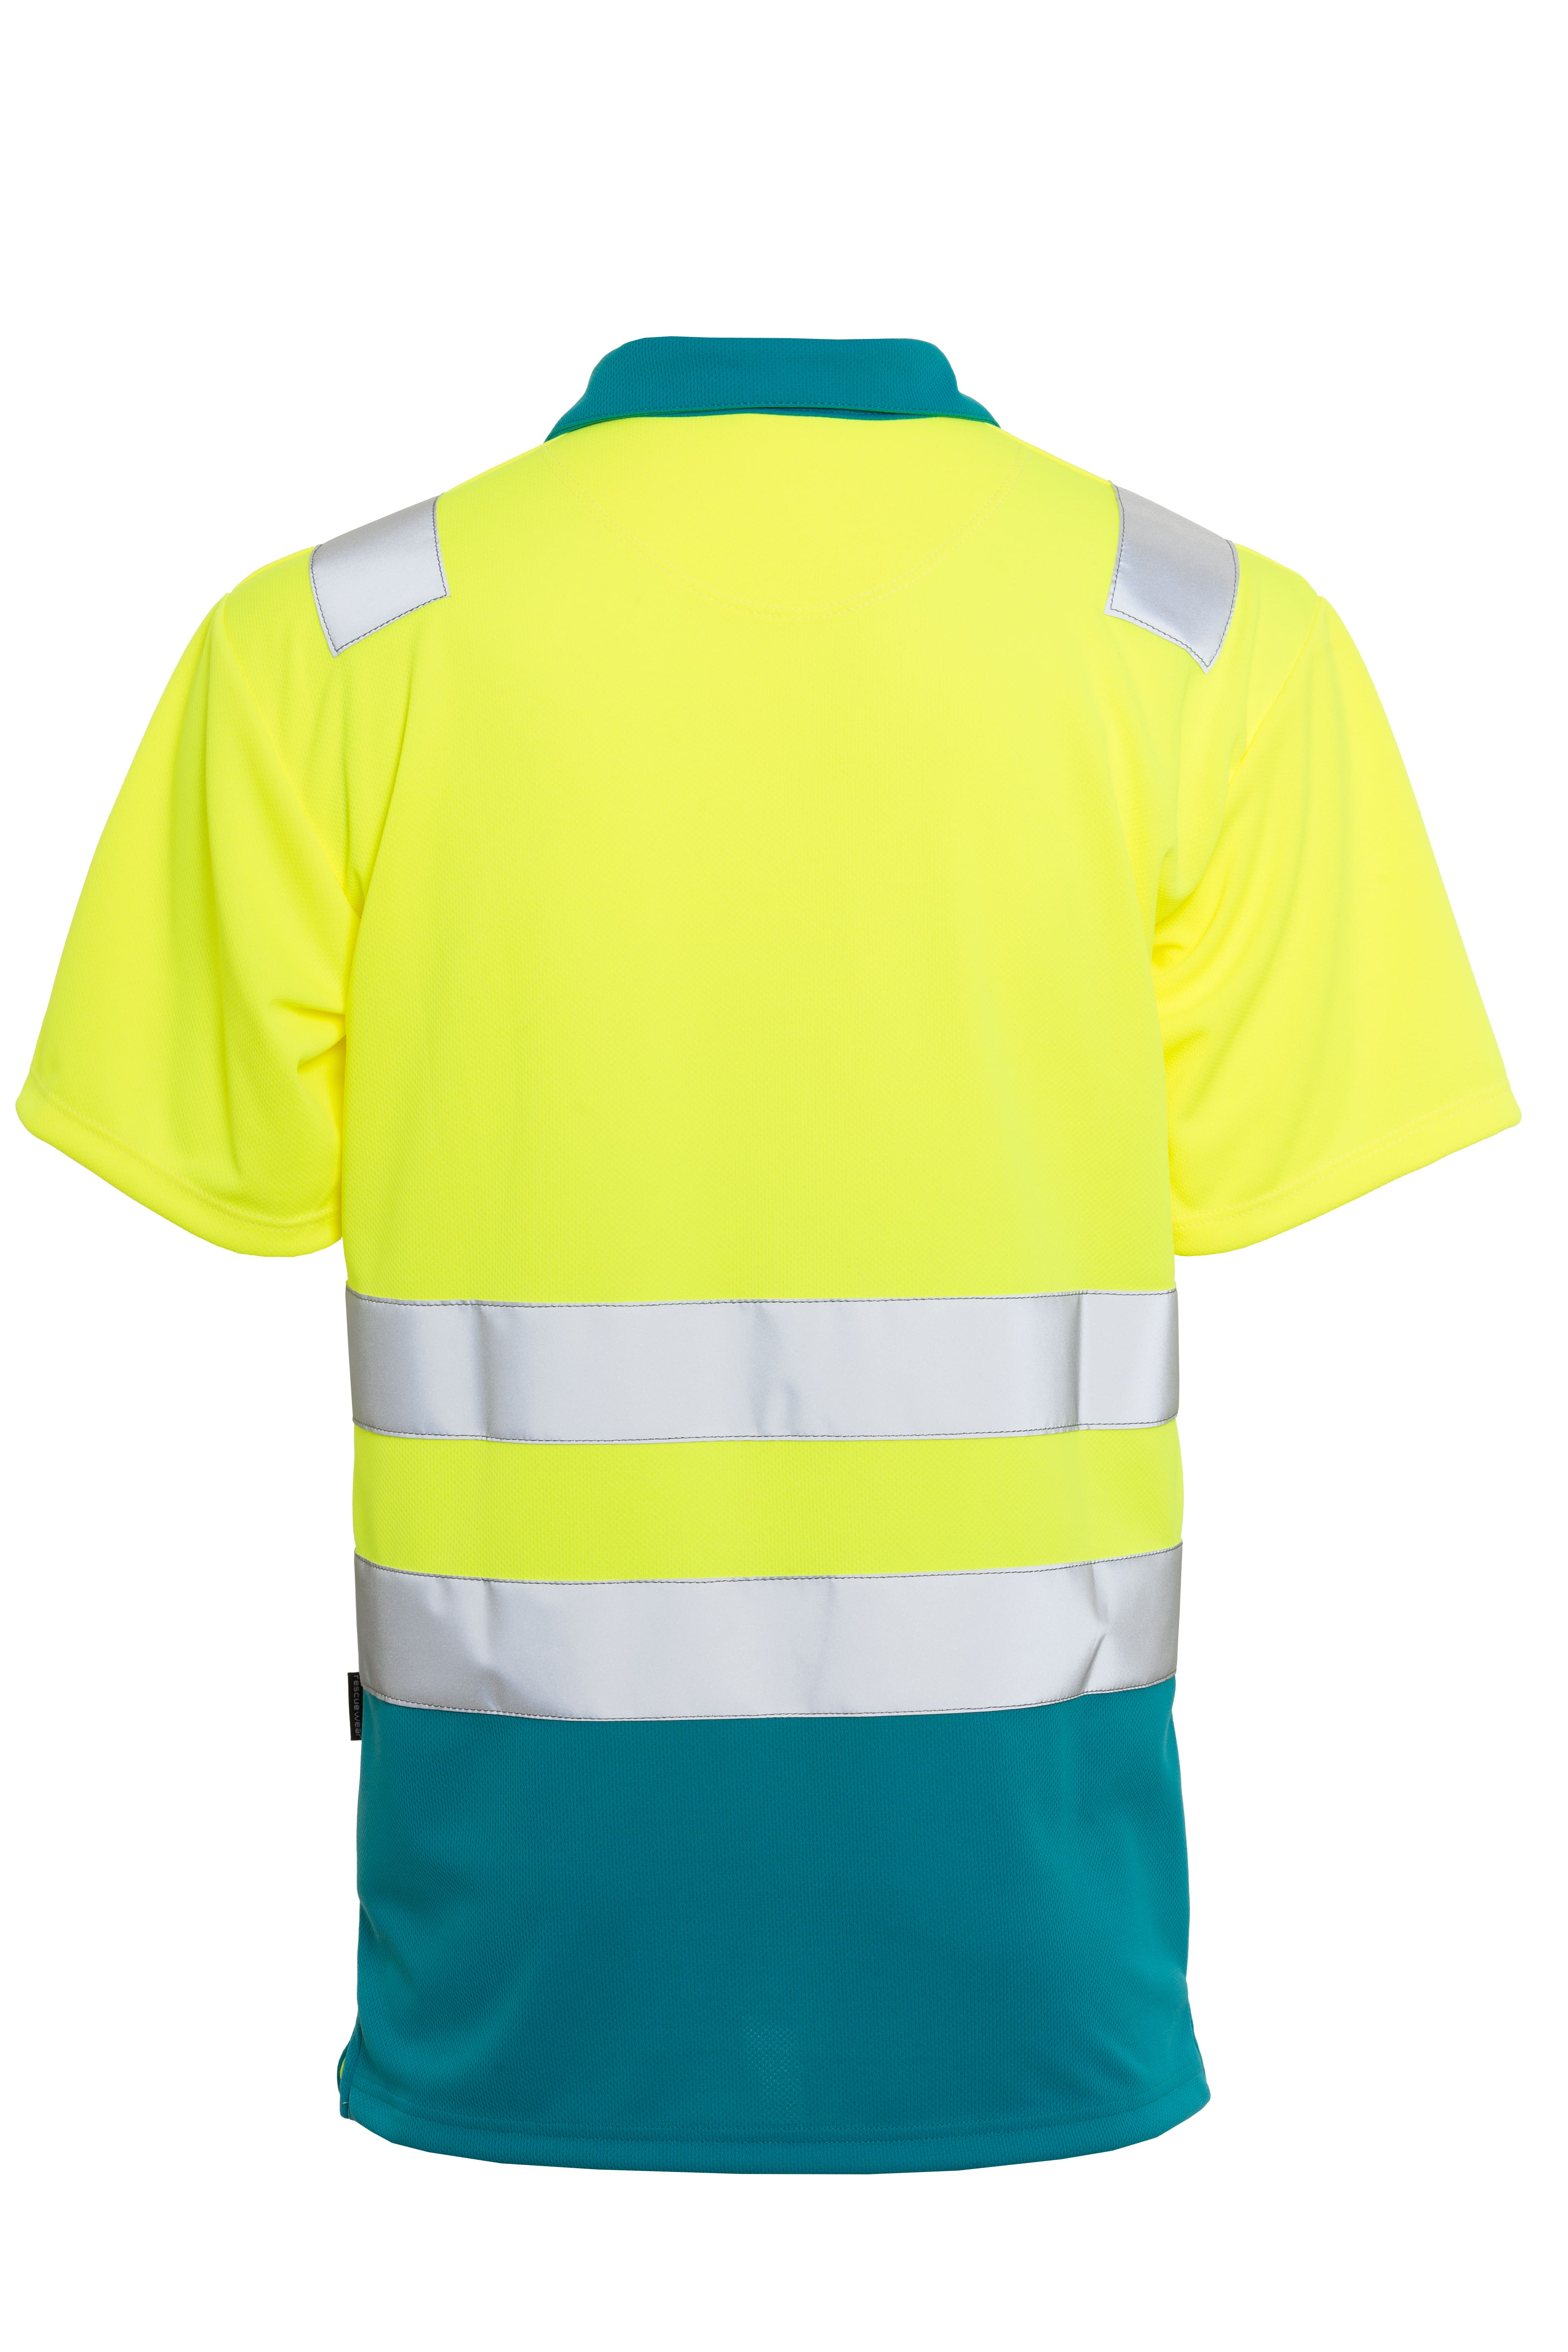 Rescuewear Poloshirt Vapor-X kurze Ärmel Klasse 2 Enamelblau / Neon Gelb - 3XL